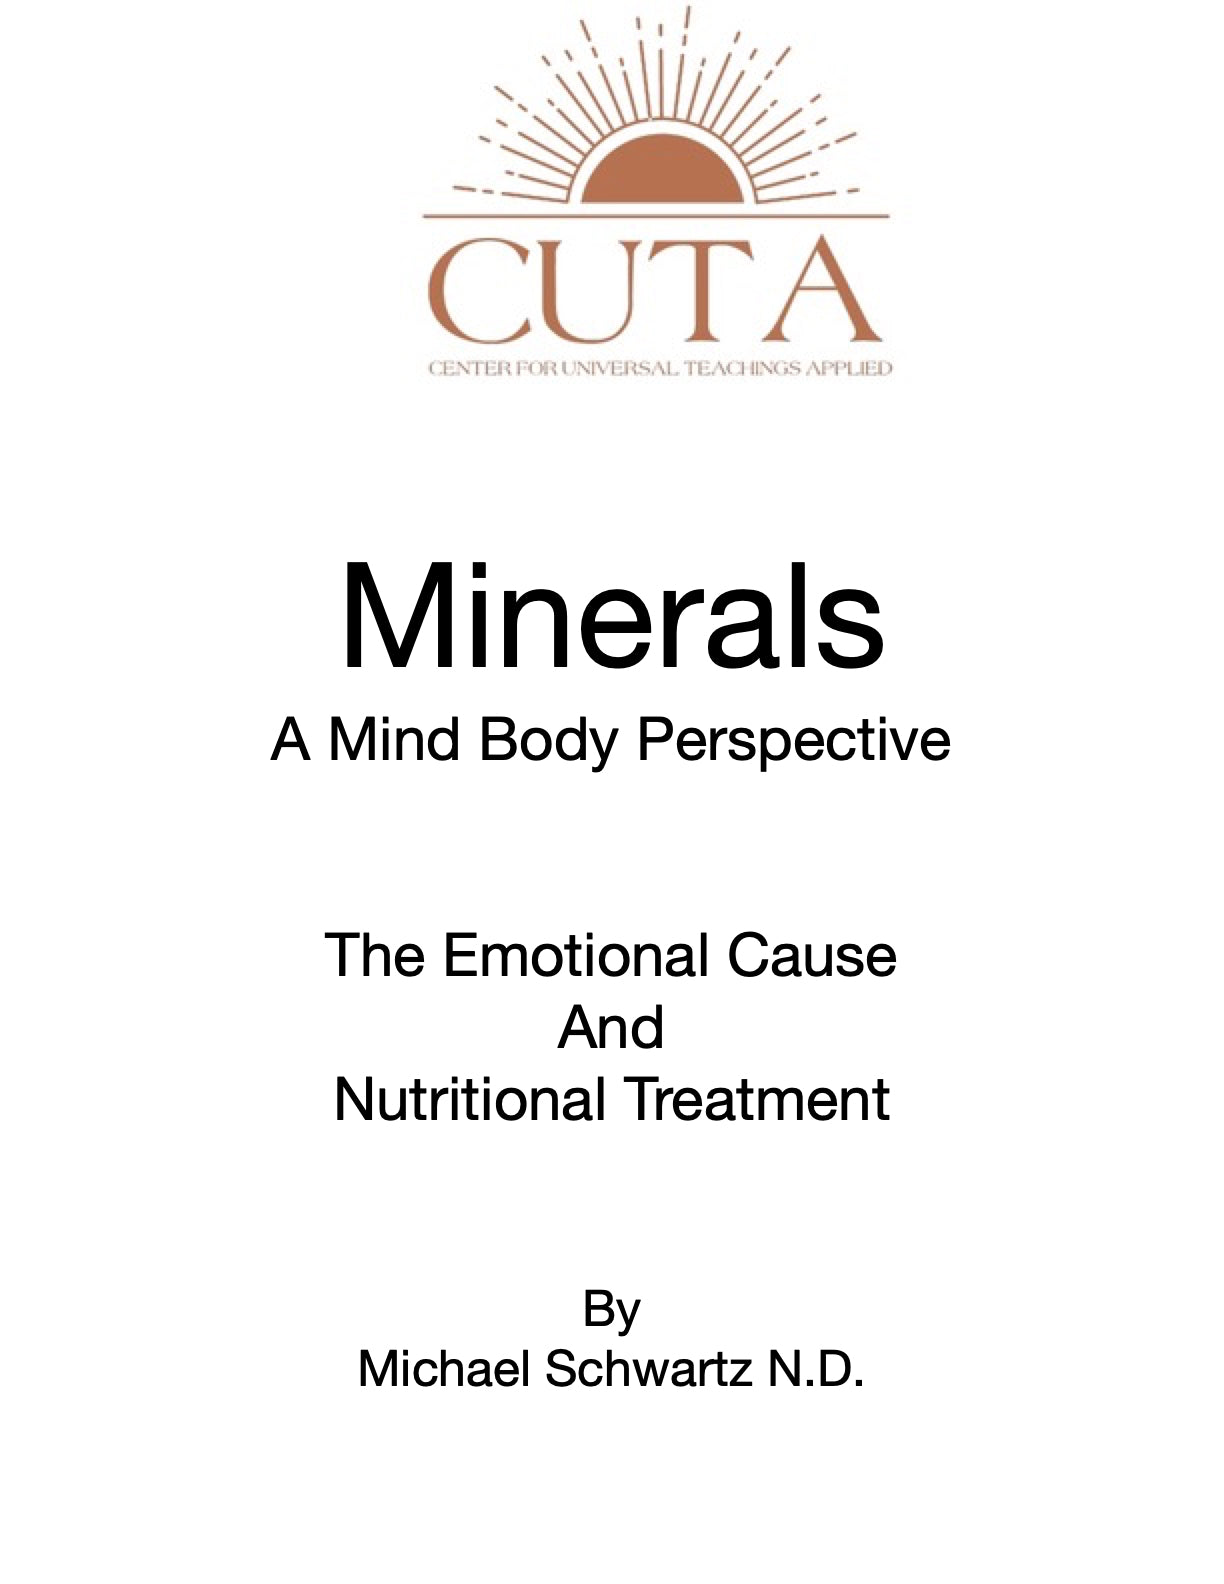 Minerals Booklet